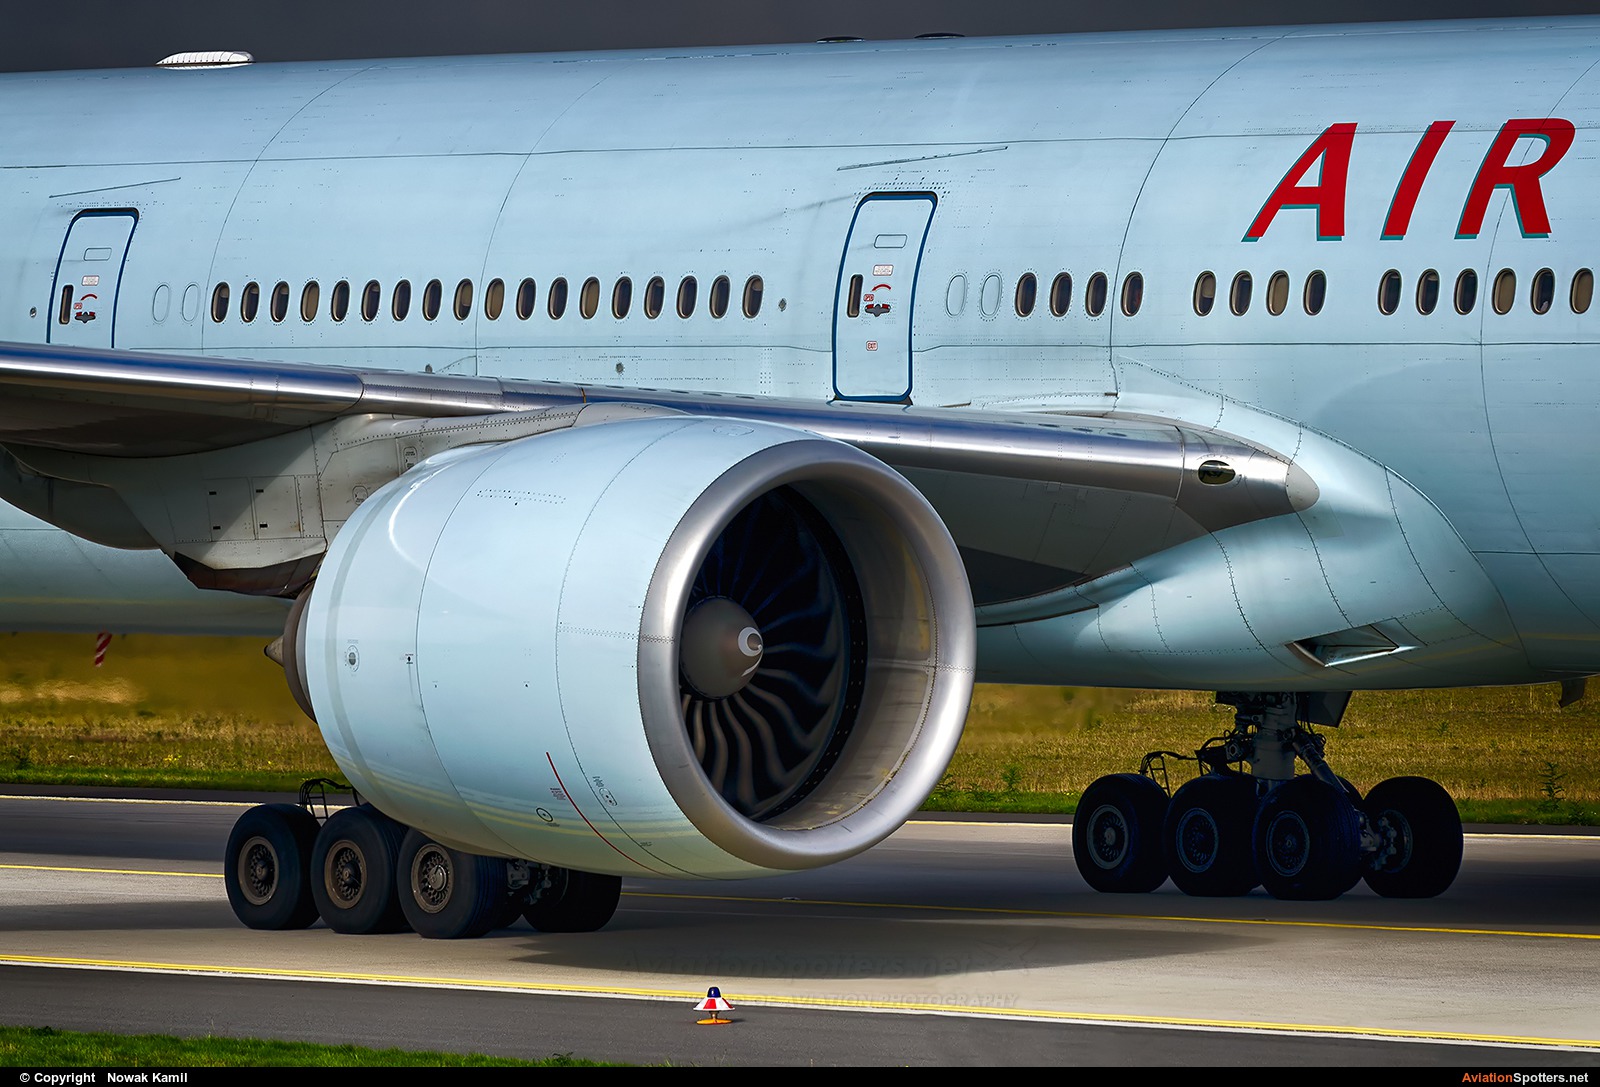 Air Canada  -  777-300ER  (C-FITW) By Nowak Kamil (kretek)